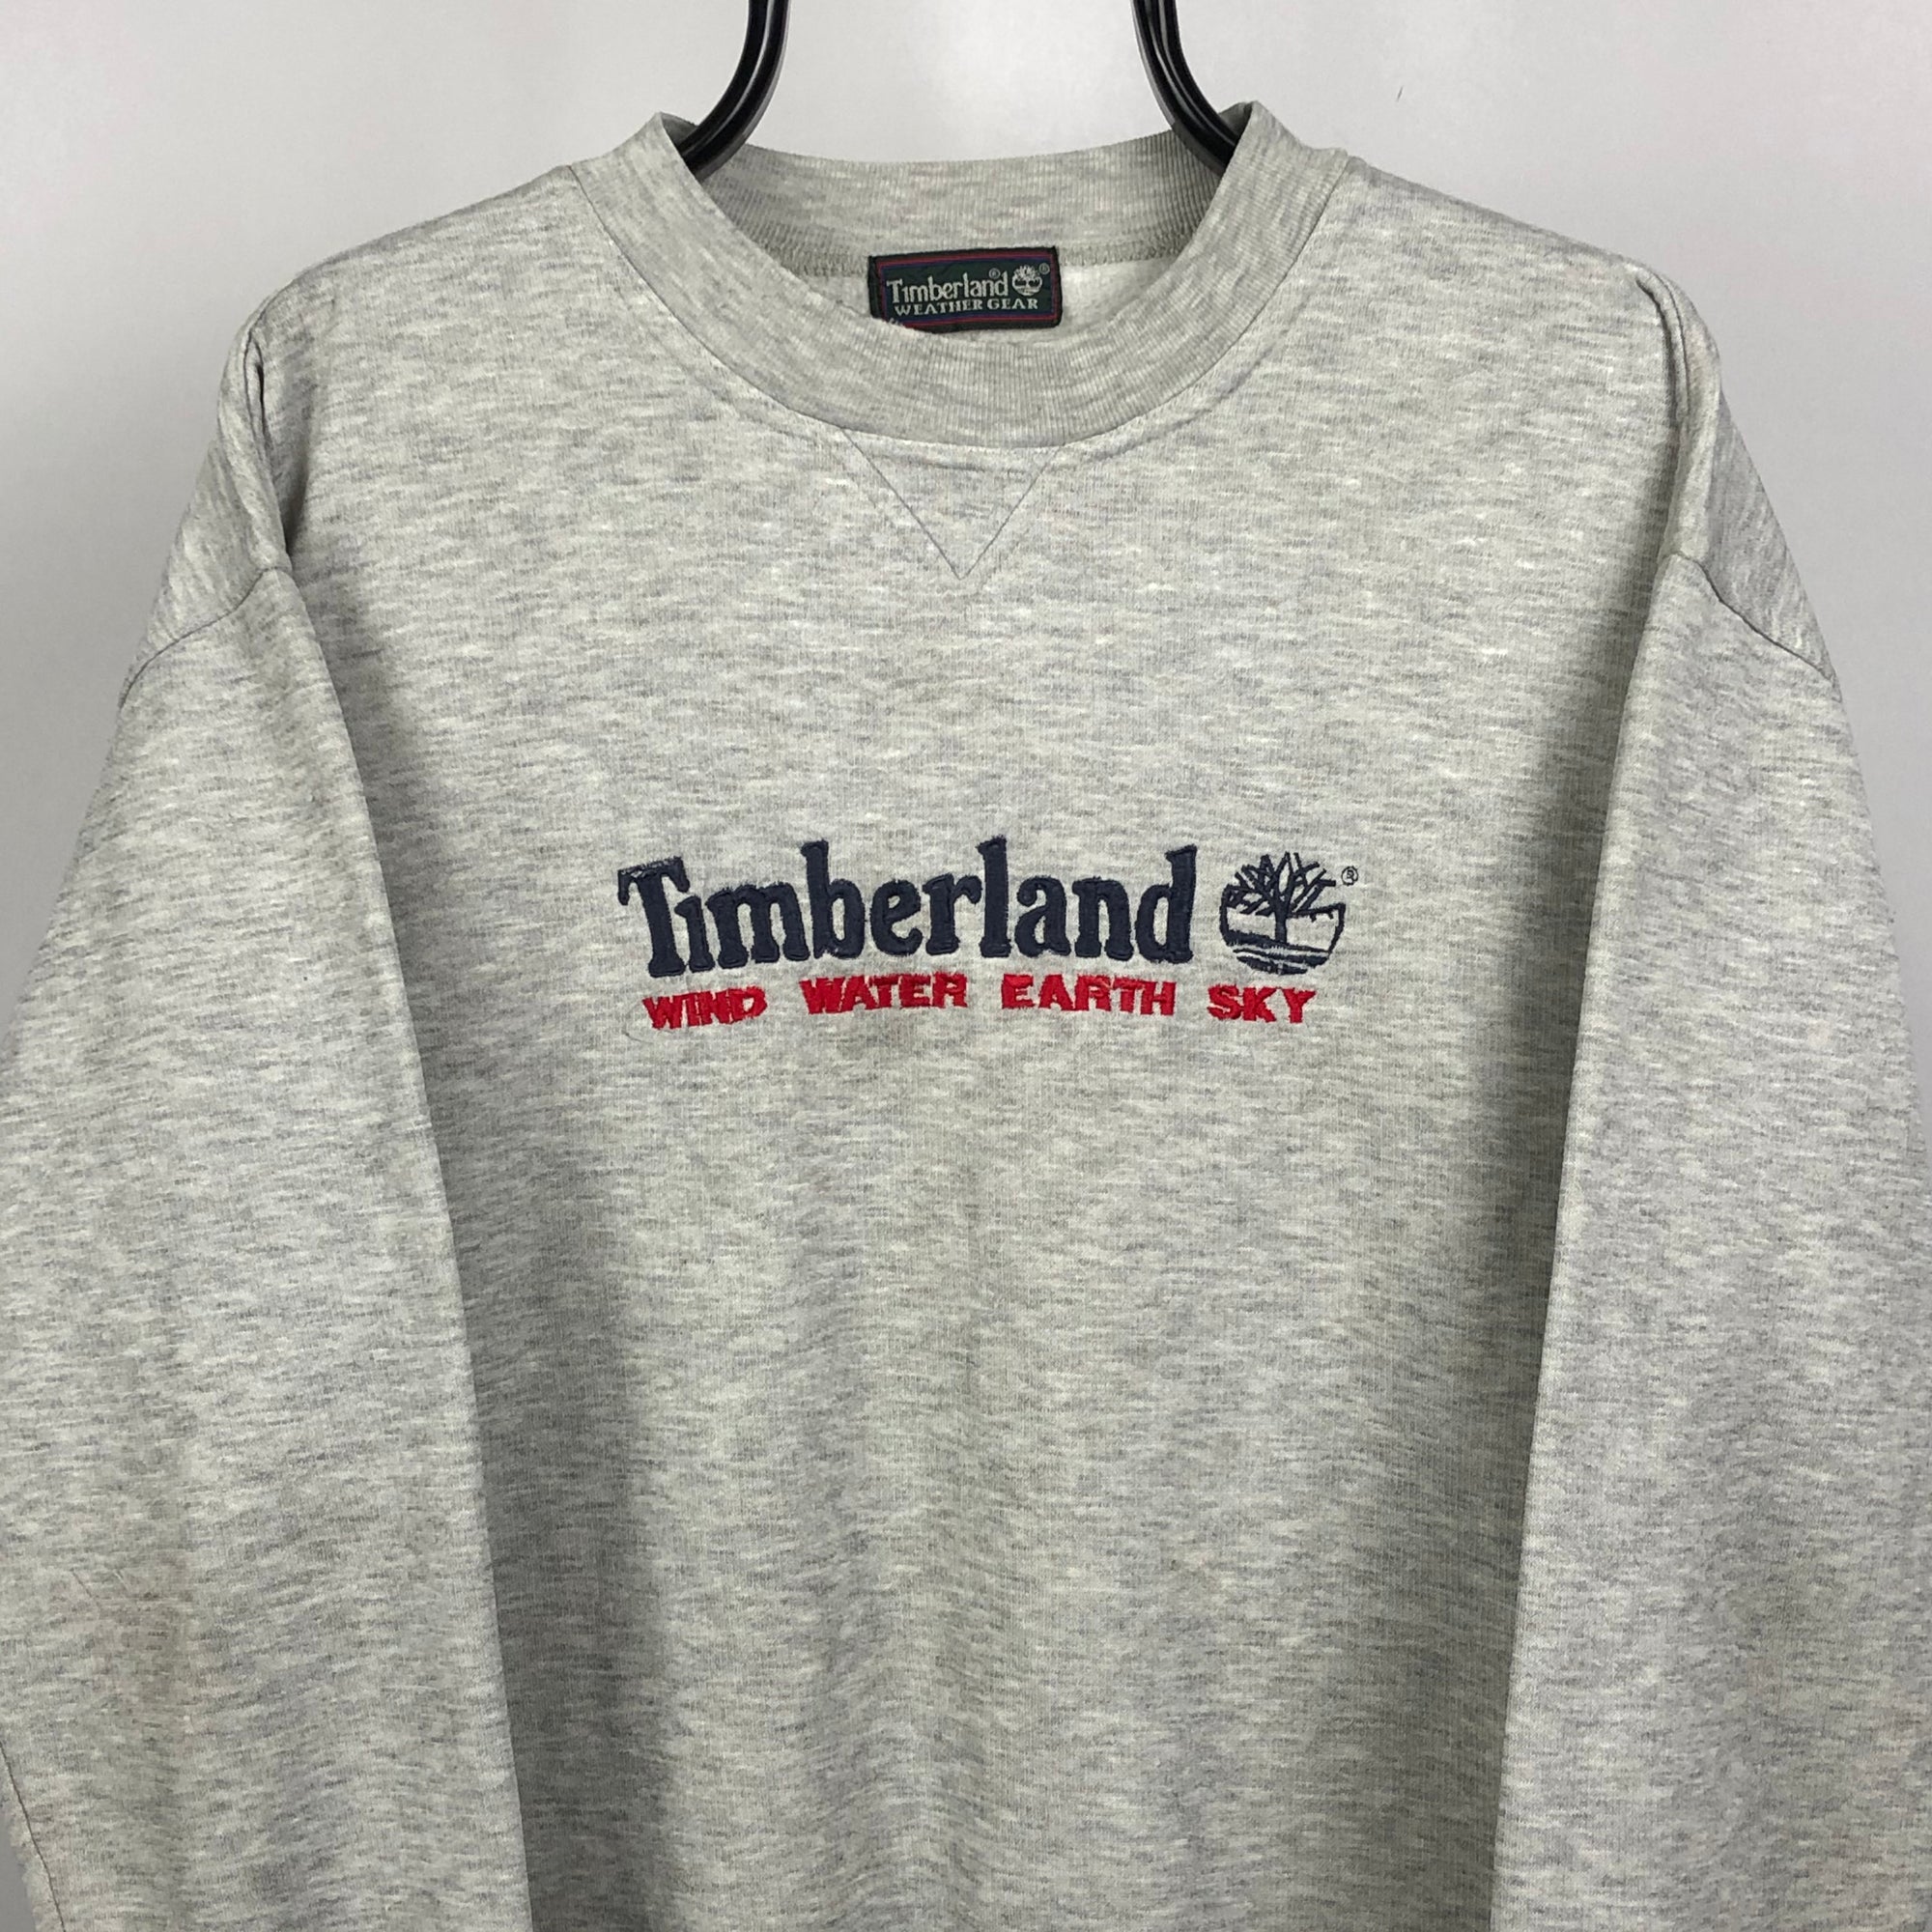 Vintage Timberland Weathergear Sweatshirt - Men's Medium/Women's Large